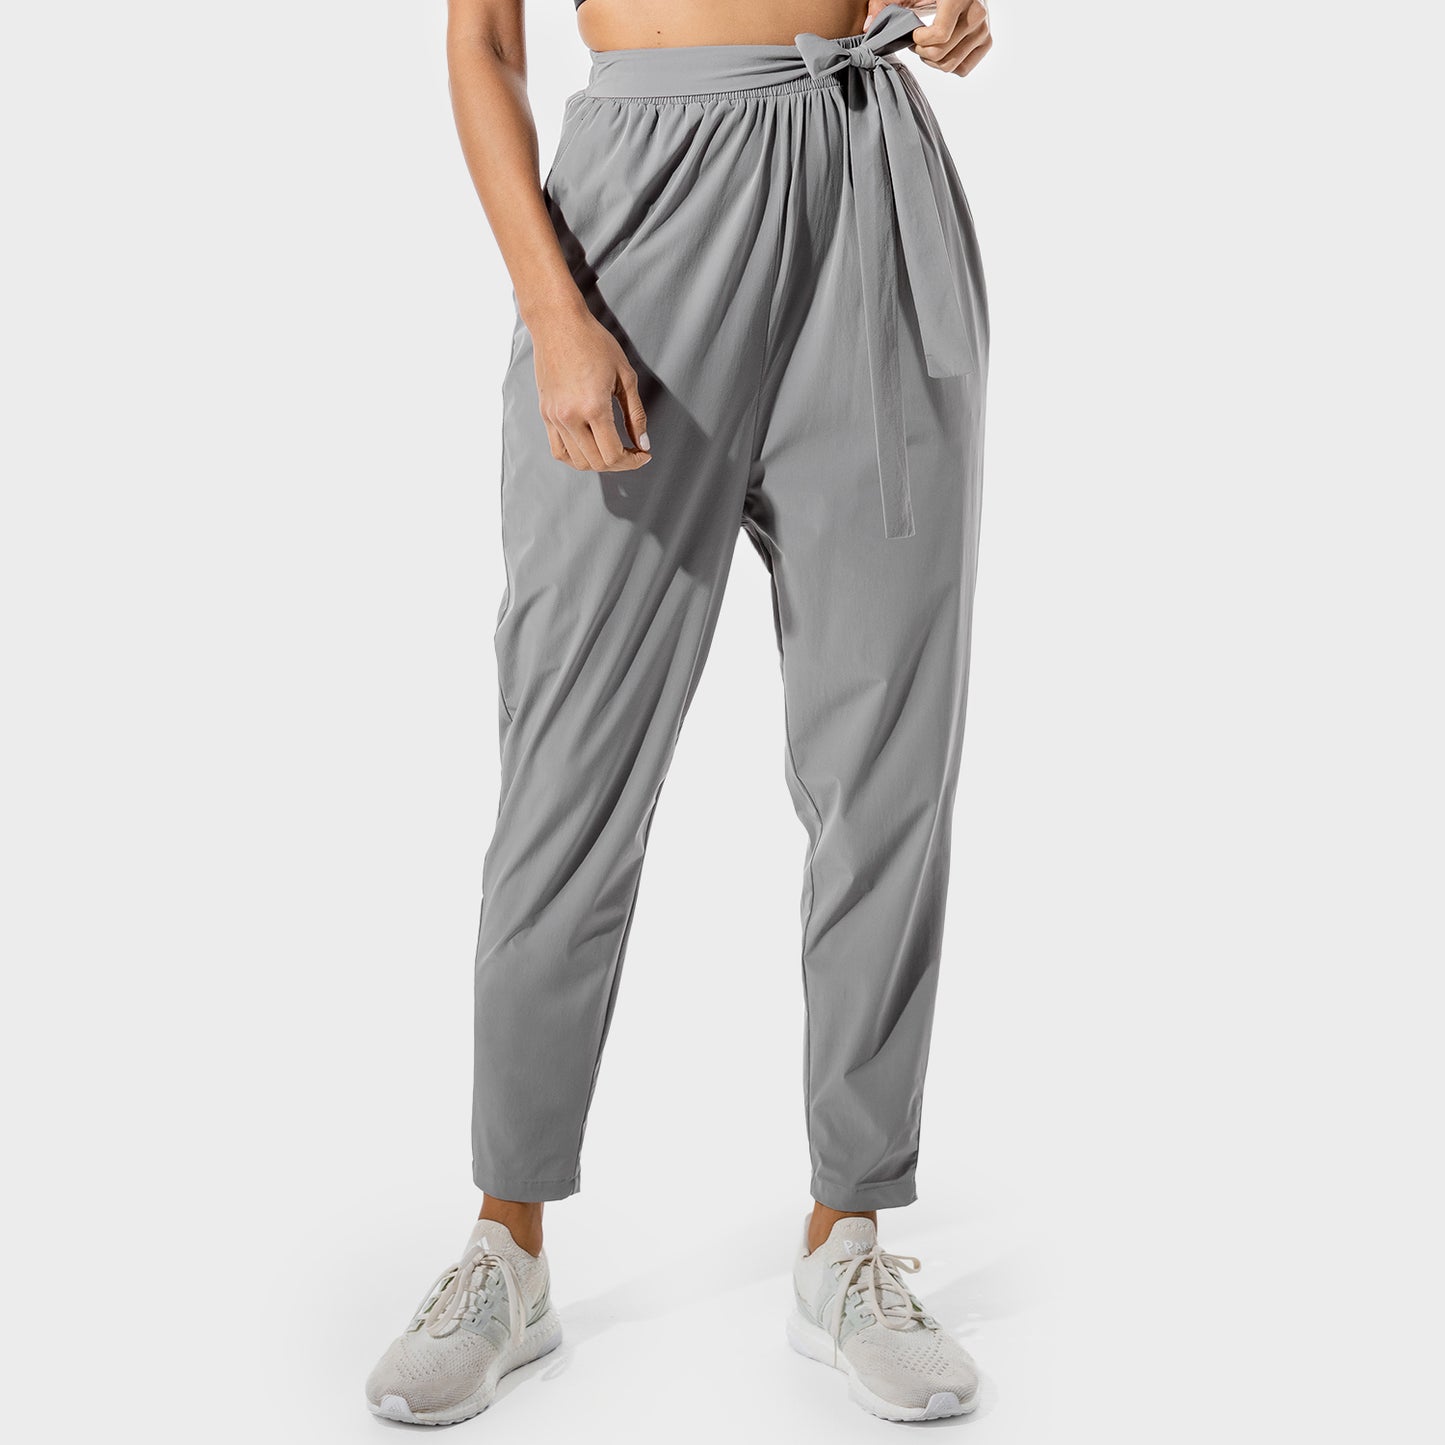 squatwolf-gym-wear-womens-fitness-wide-leg-pants-grey-workout-pants